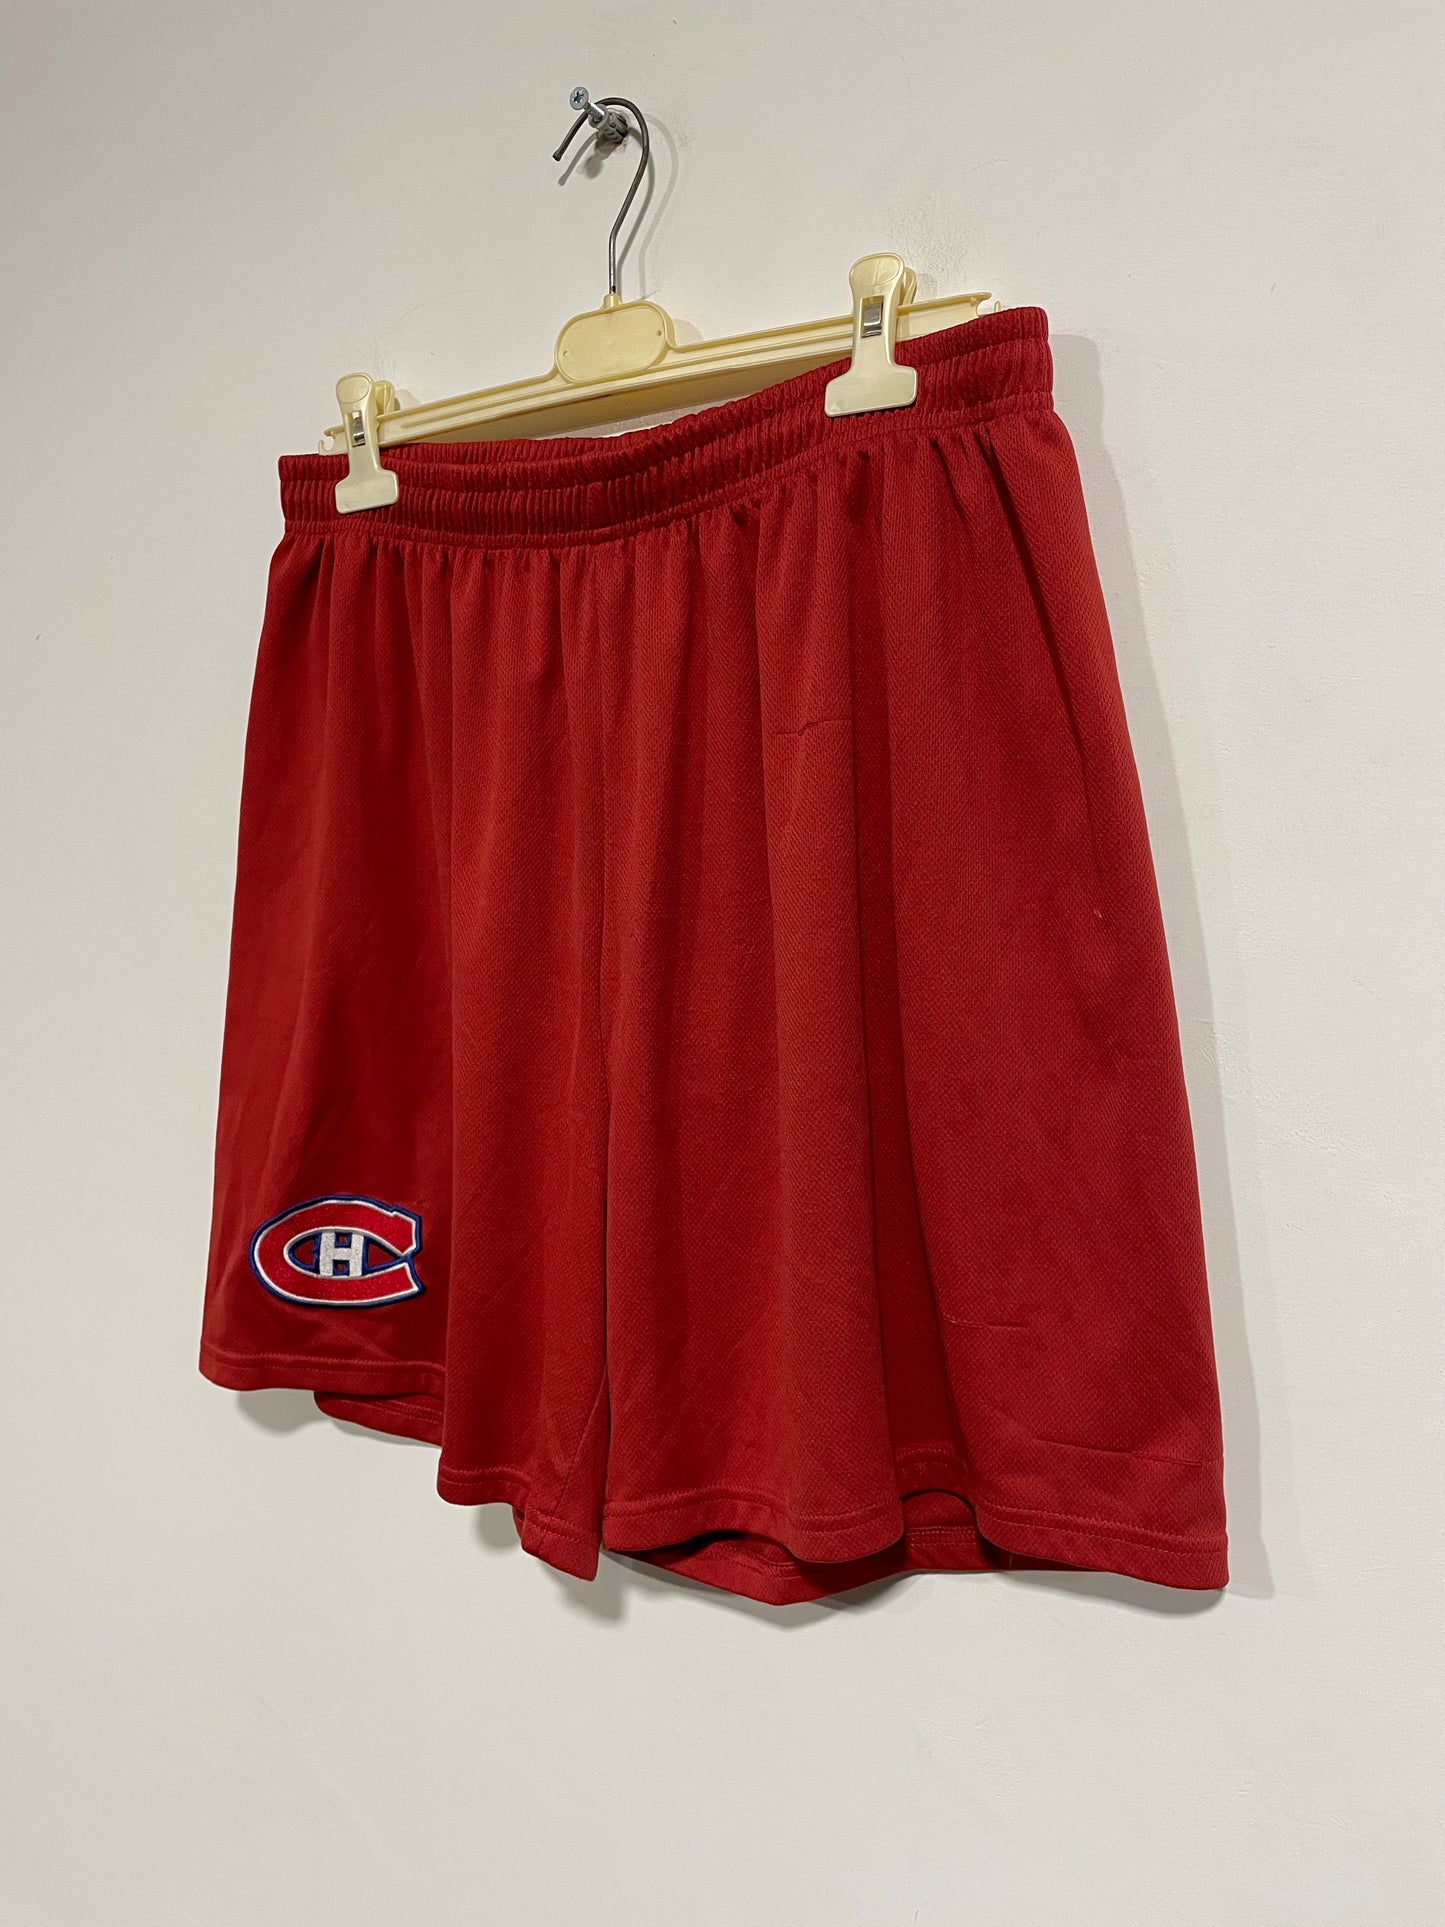 Shorts NHL Montreal Canadiens (B546)